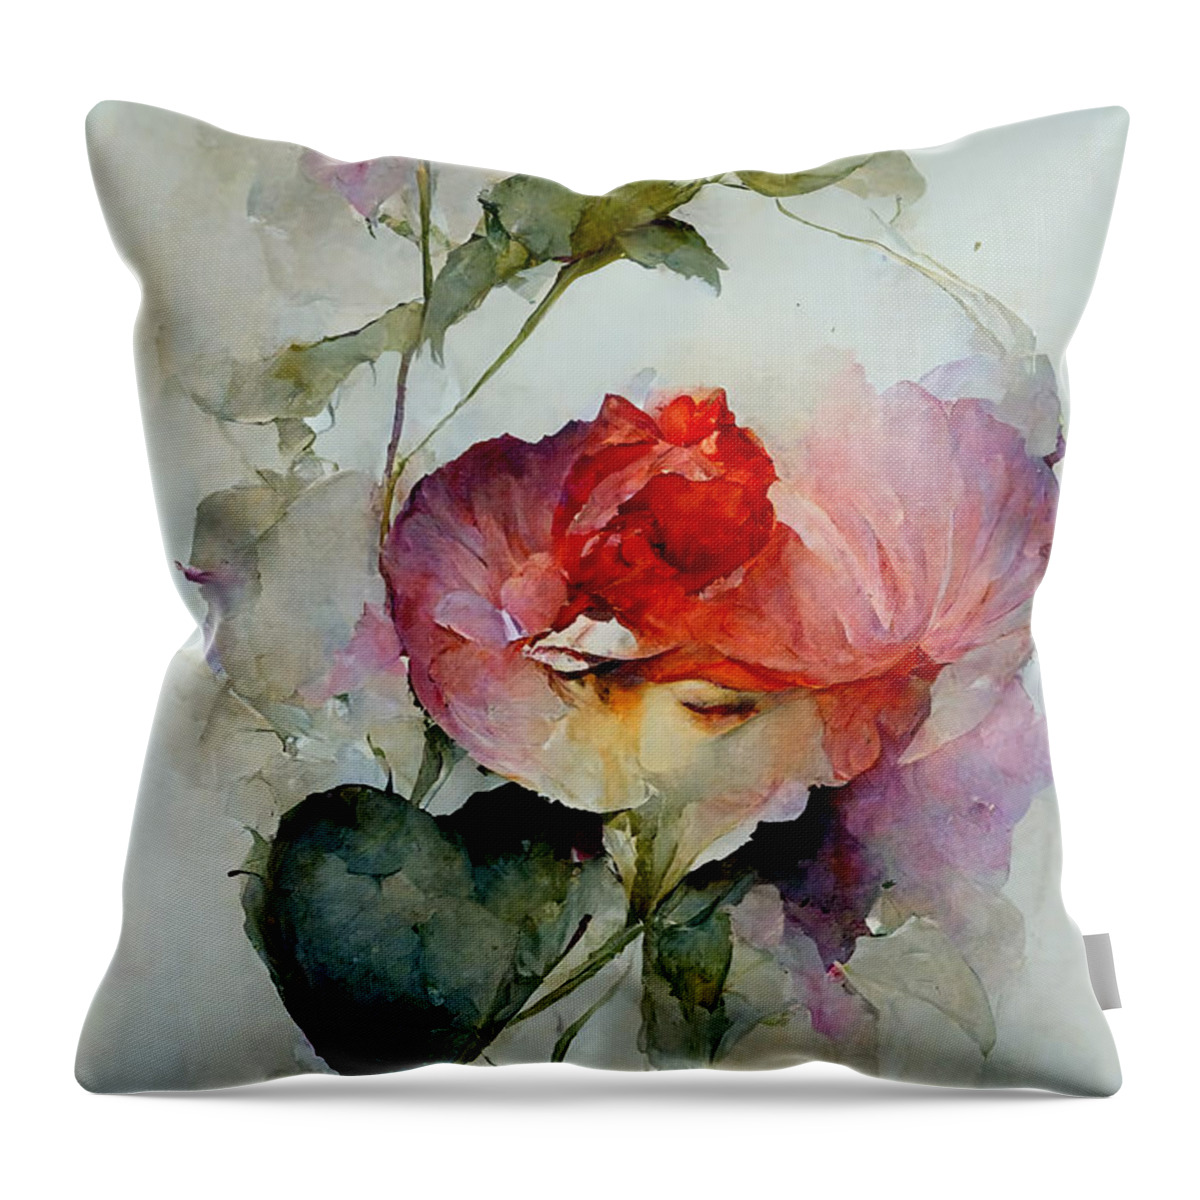 Series Throw Pillow featuring the digital art Love through roses #2 by Sabantha